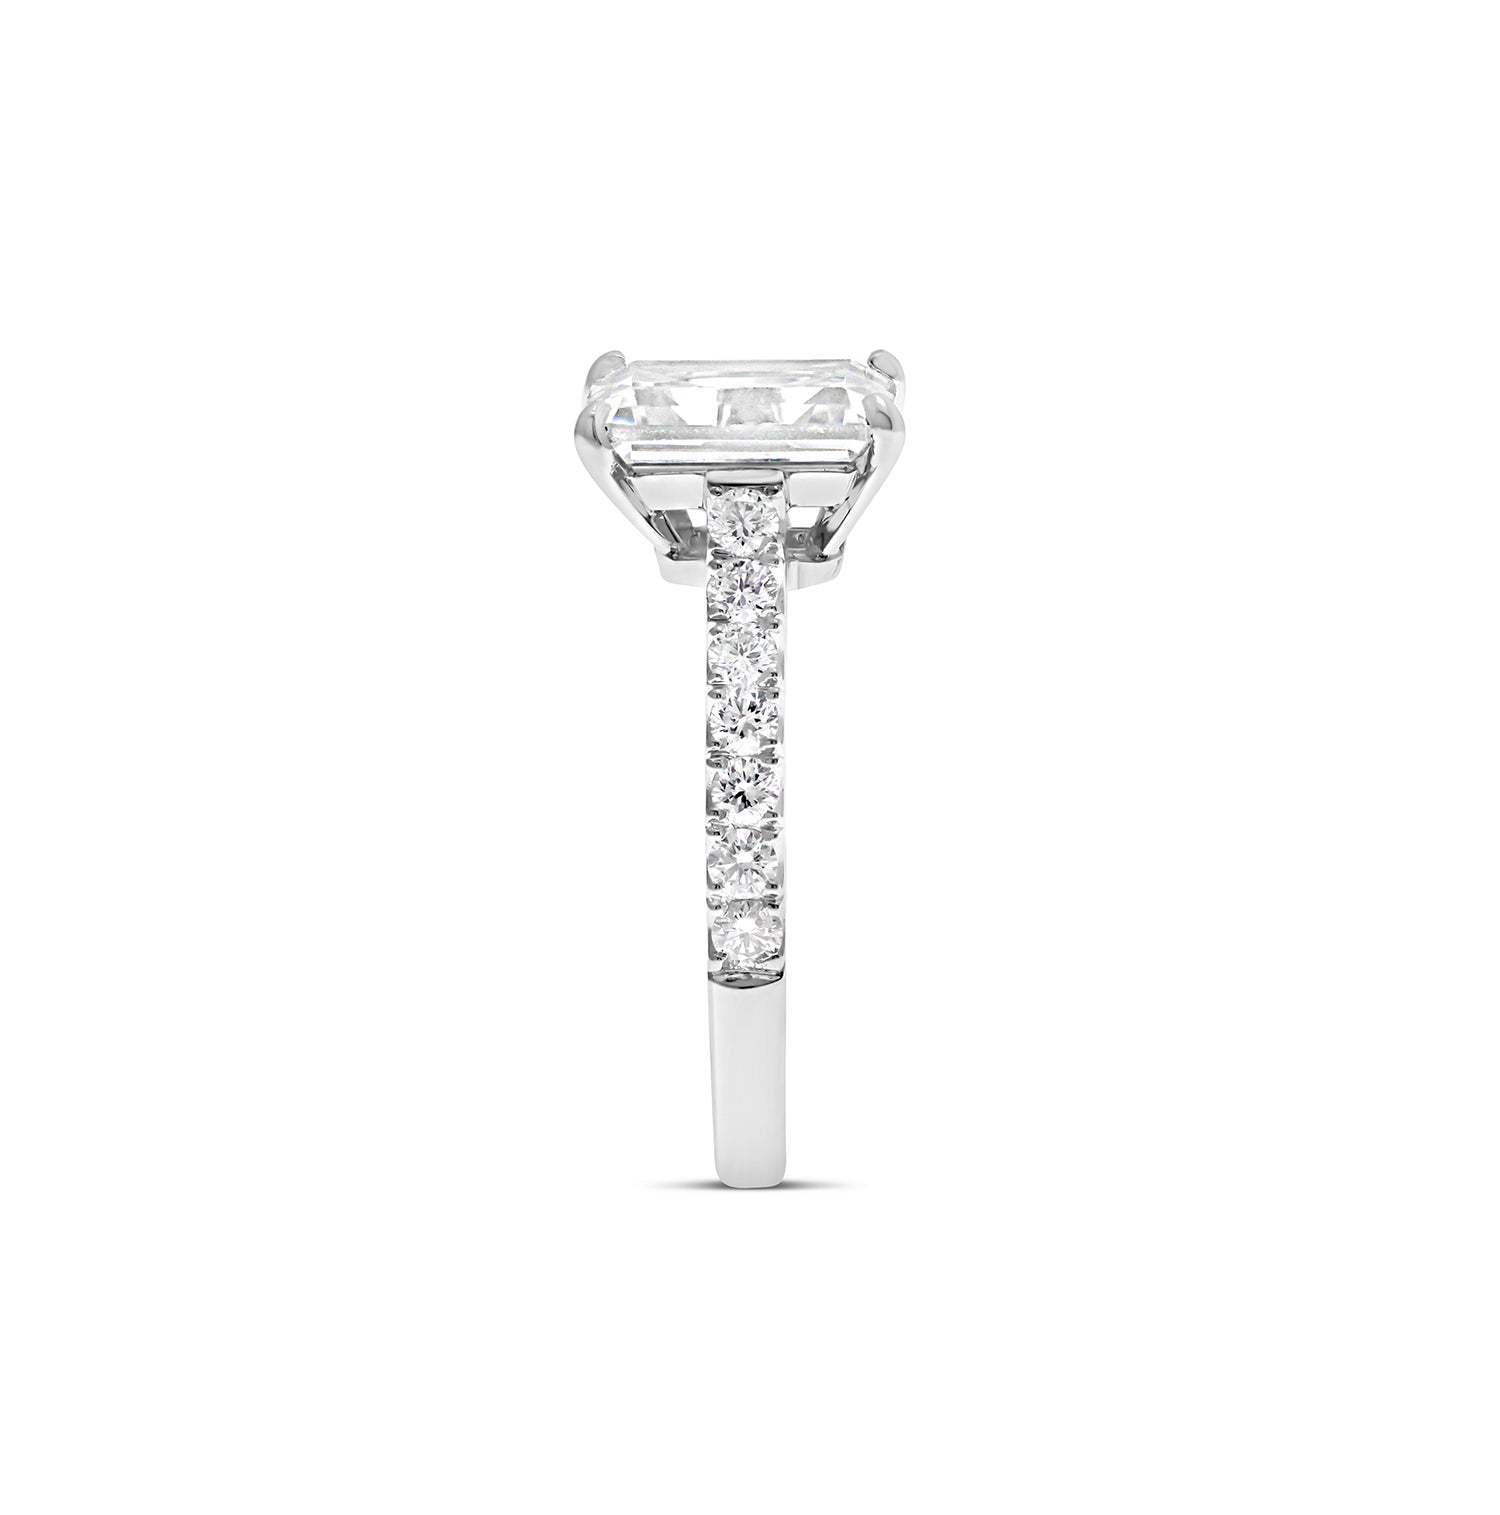 Emerald Cut Solitaire Diamond Engagement Ring castle set diamond band